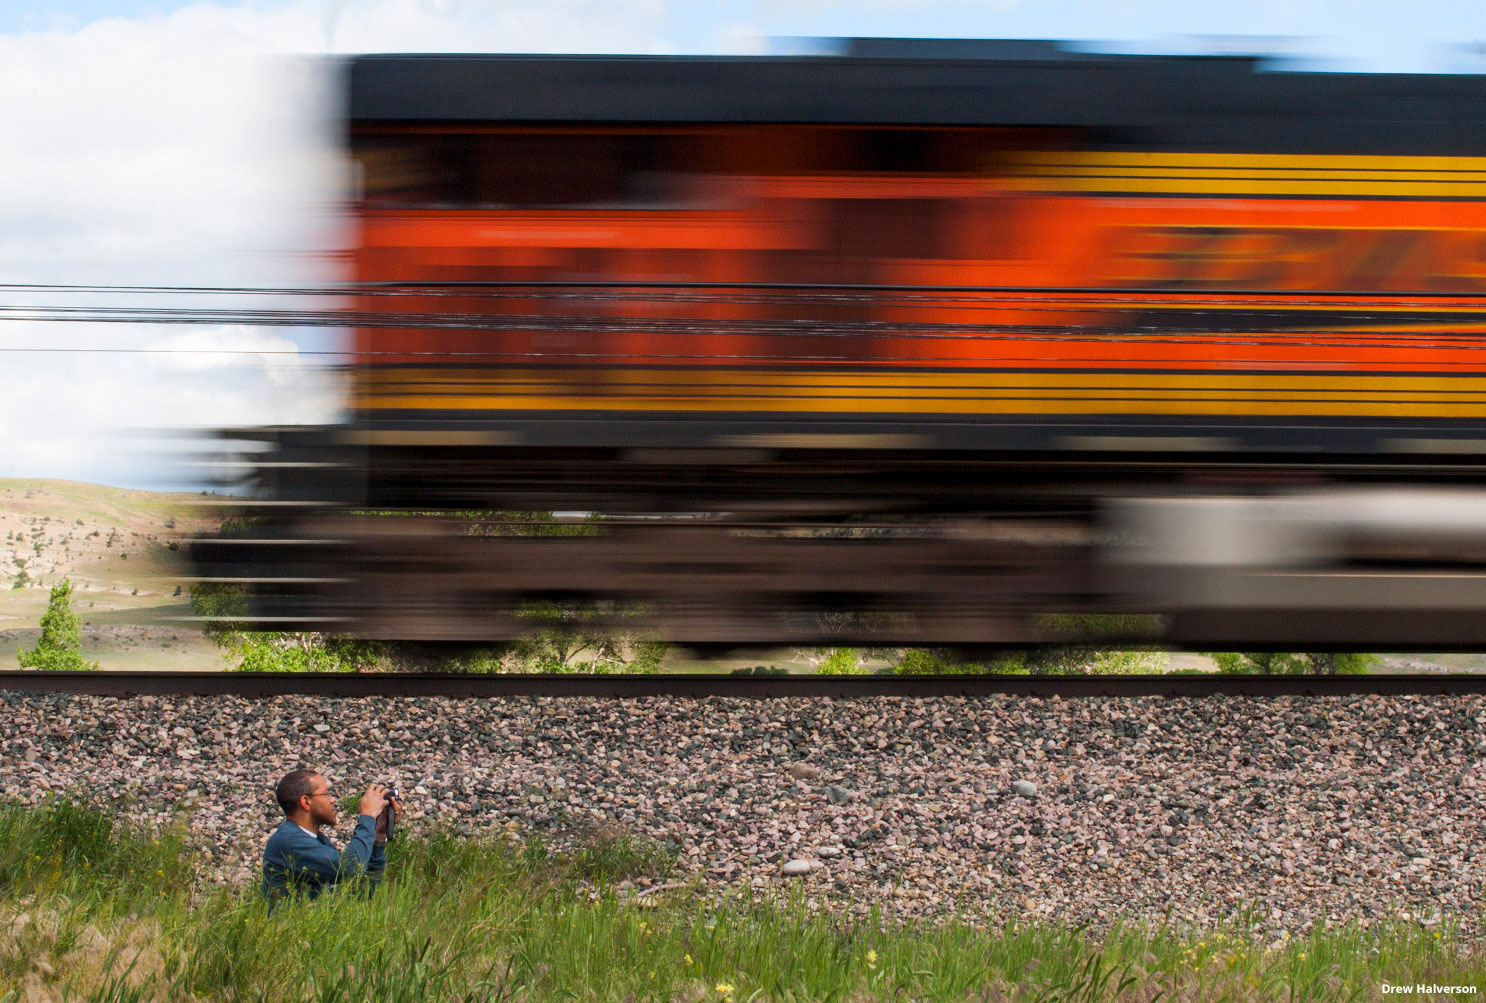 A railfan taking a photo of a diesel locomotive speeding by.